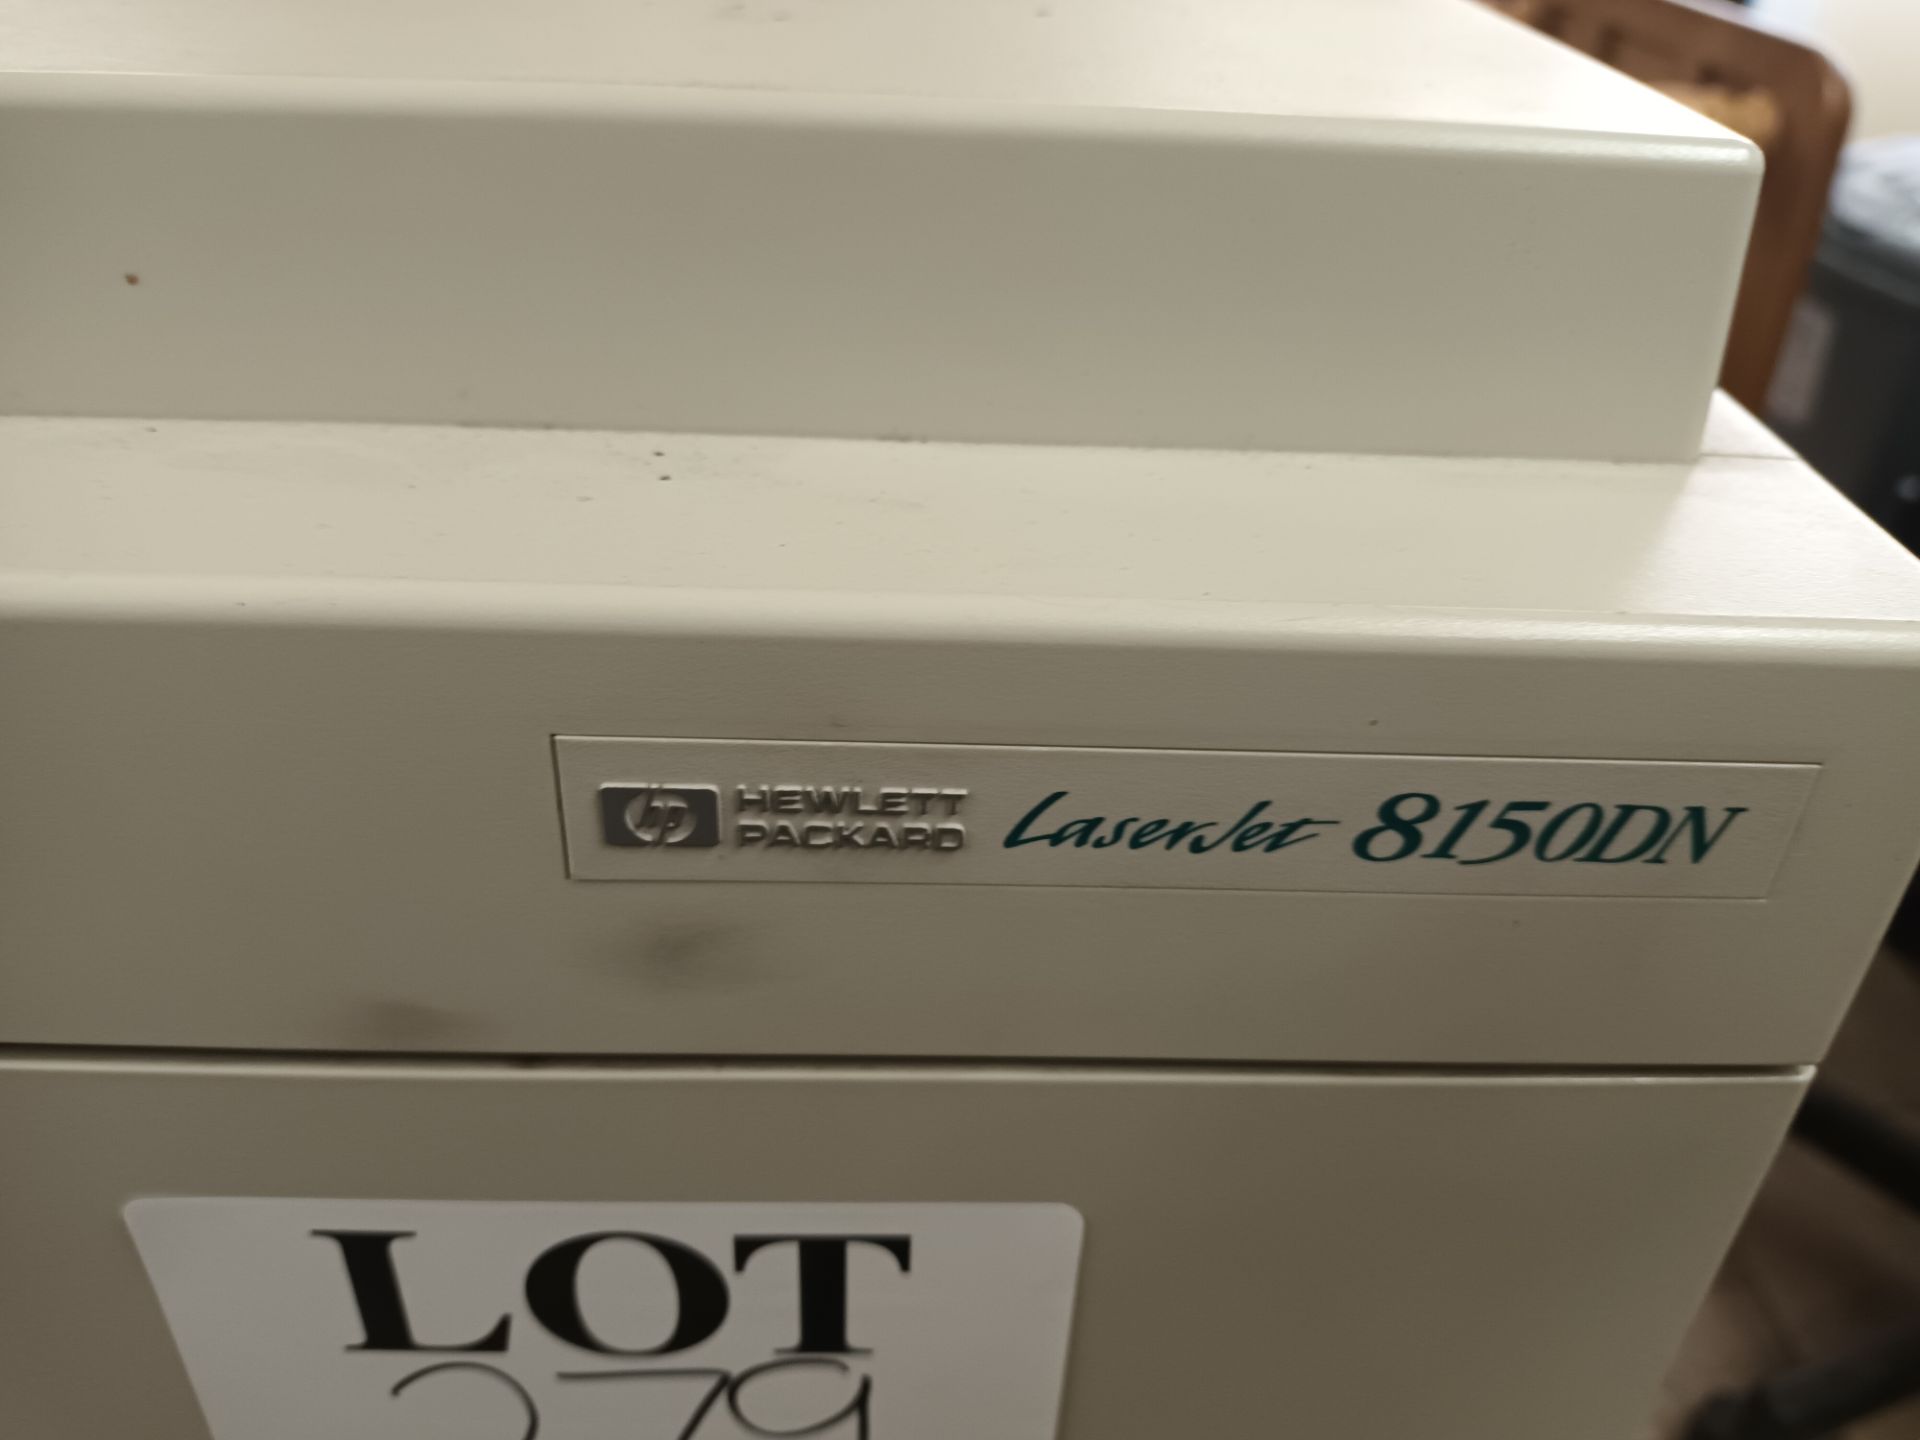 HP LaserJet 8250DN copier and printer - Image 2 of 3